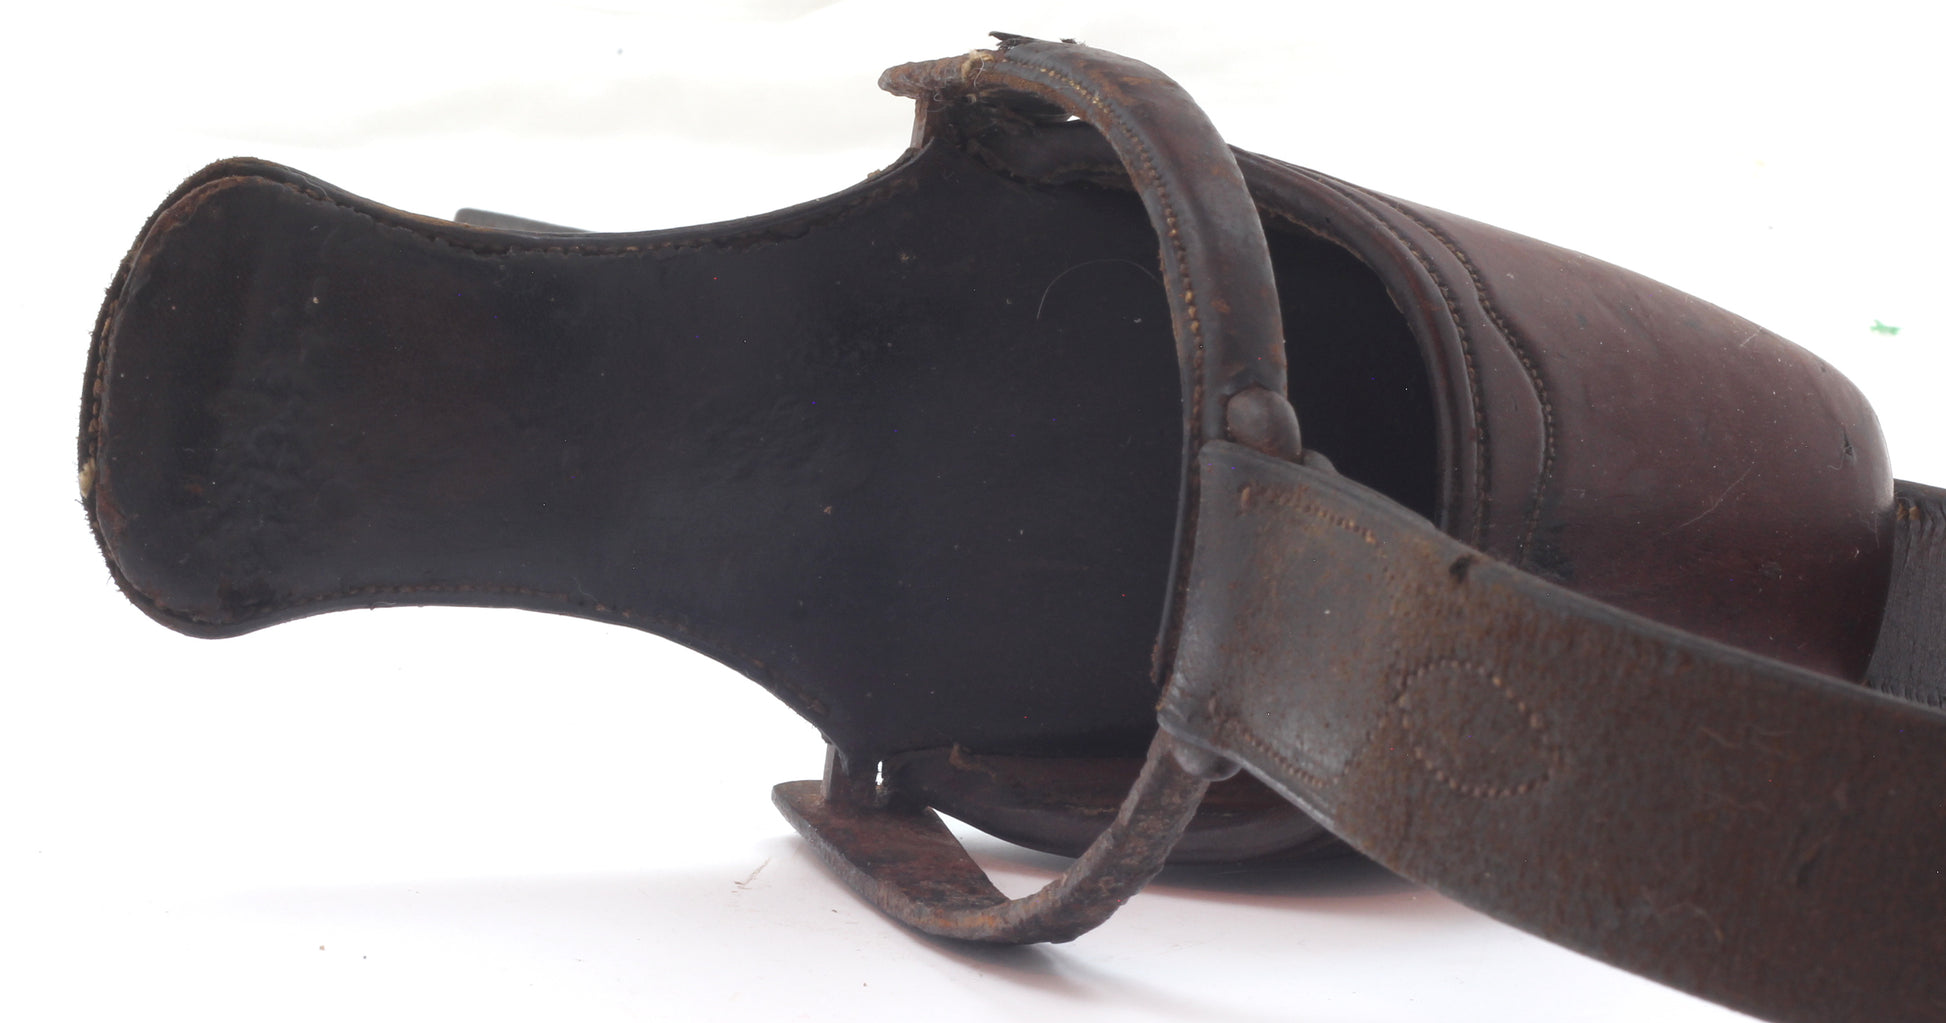 Leather slipper stirrup